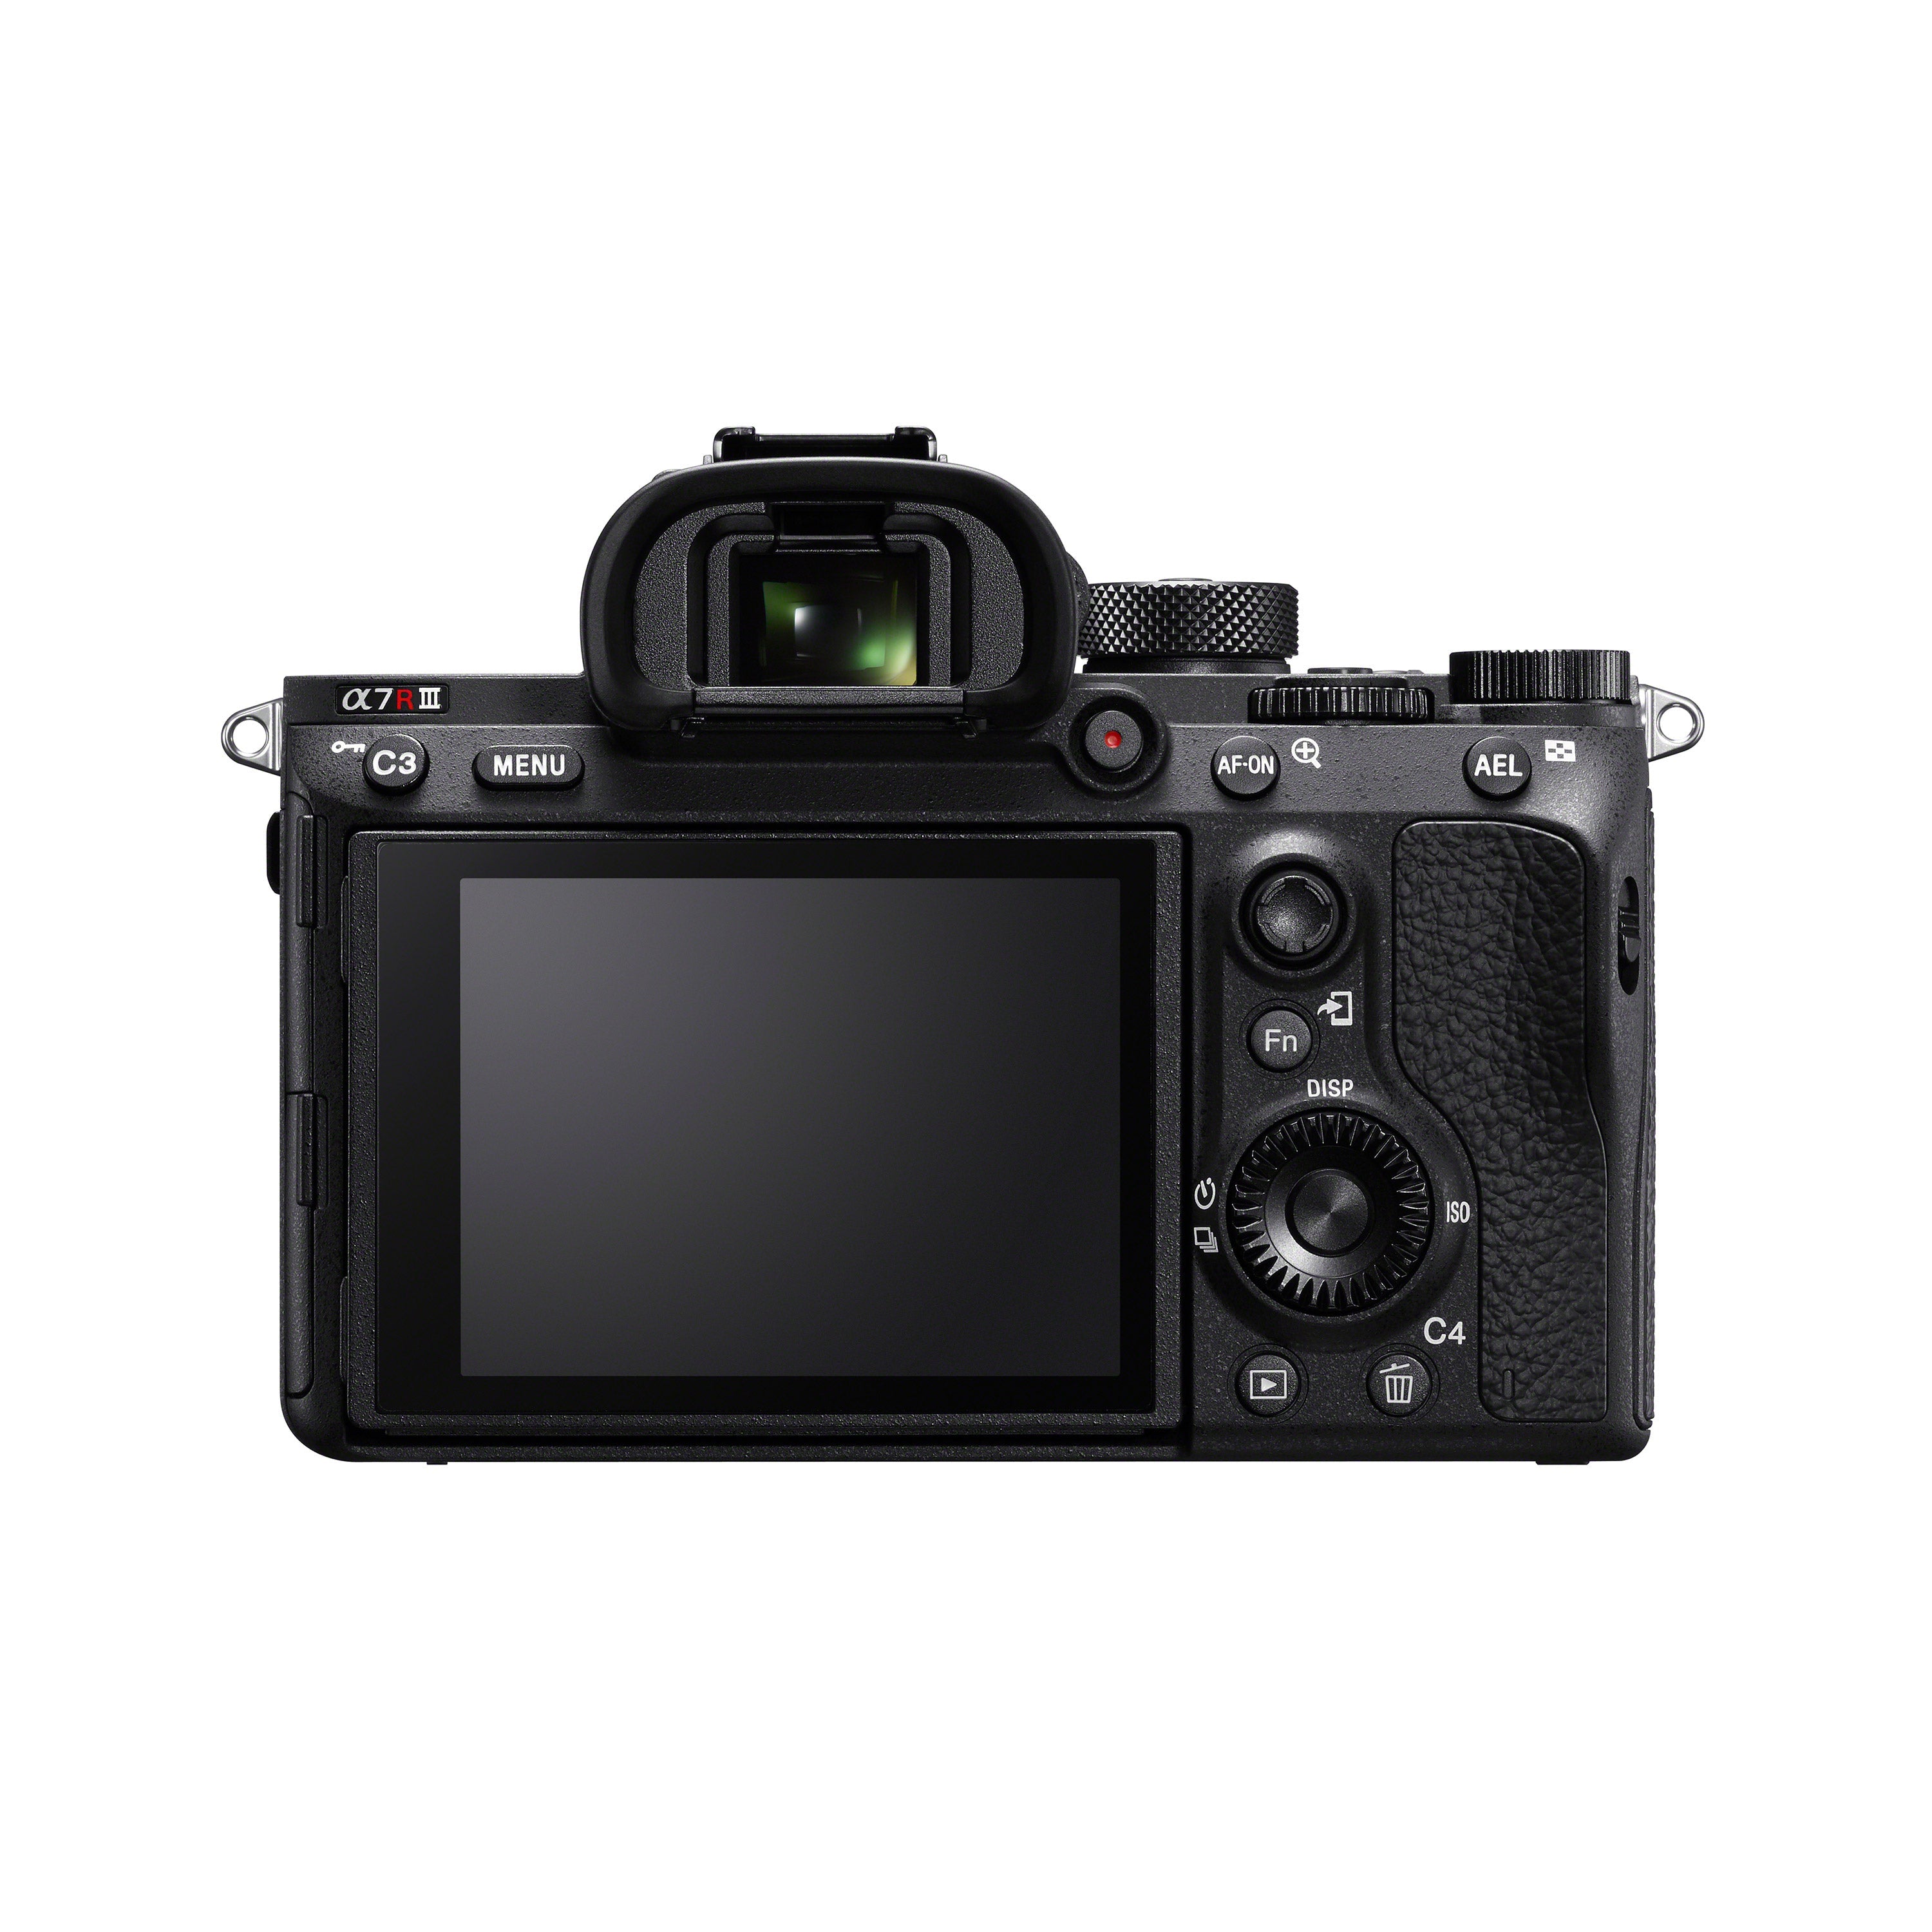 Sony a7R IIIa with 35 mm full-frame image sensor